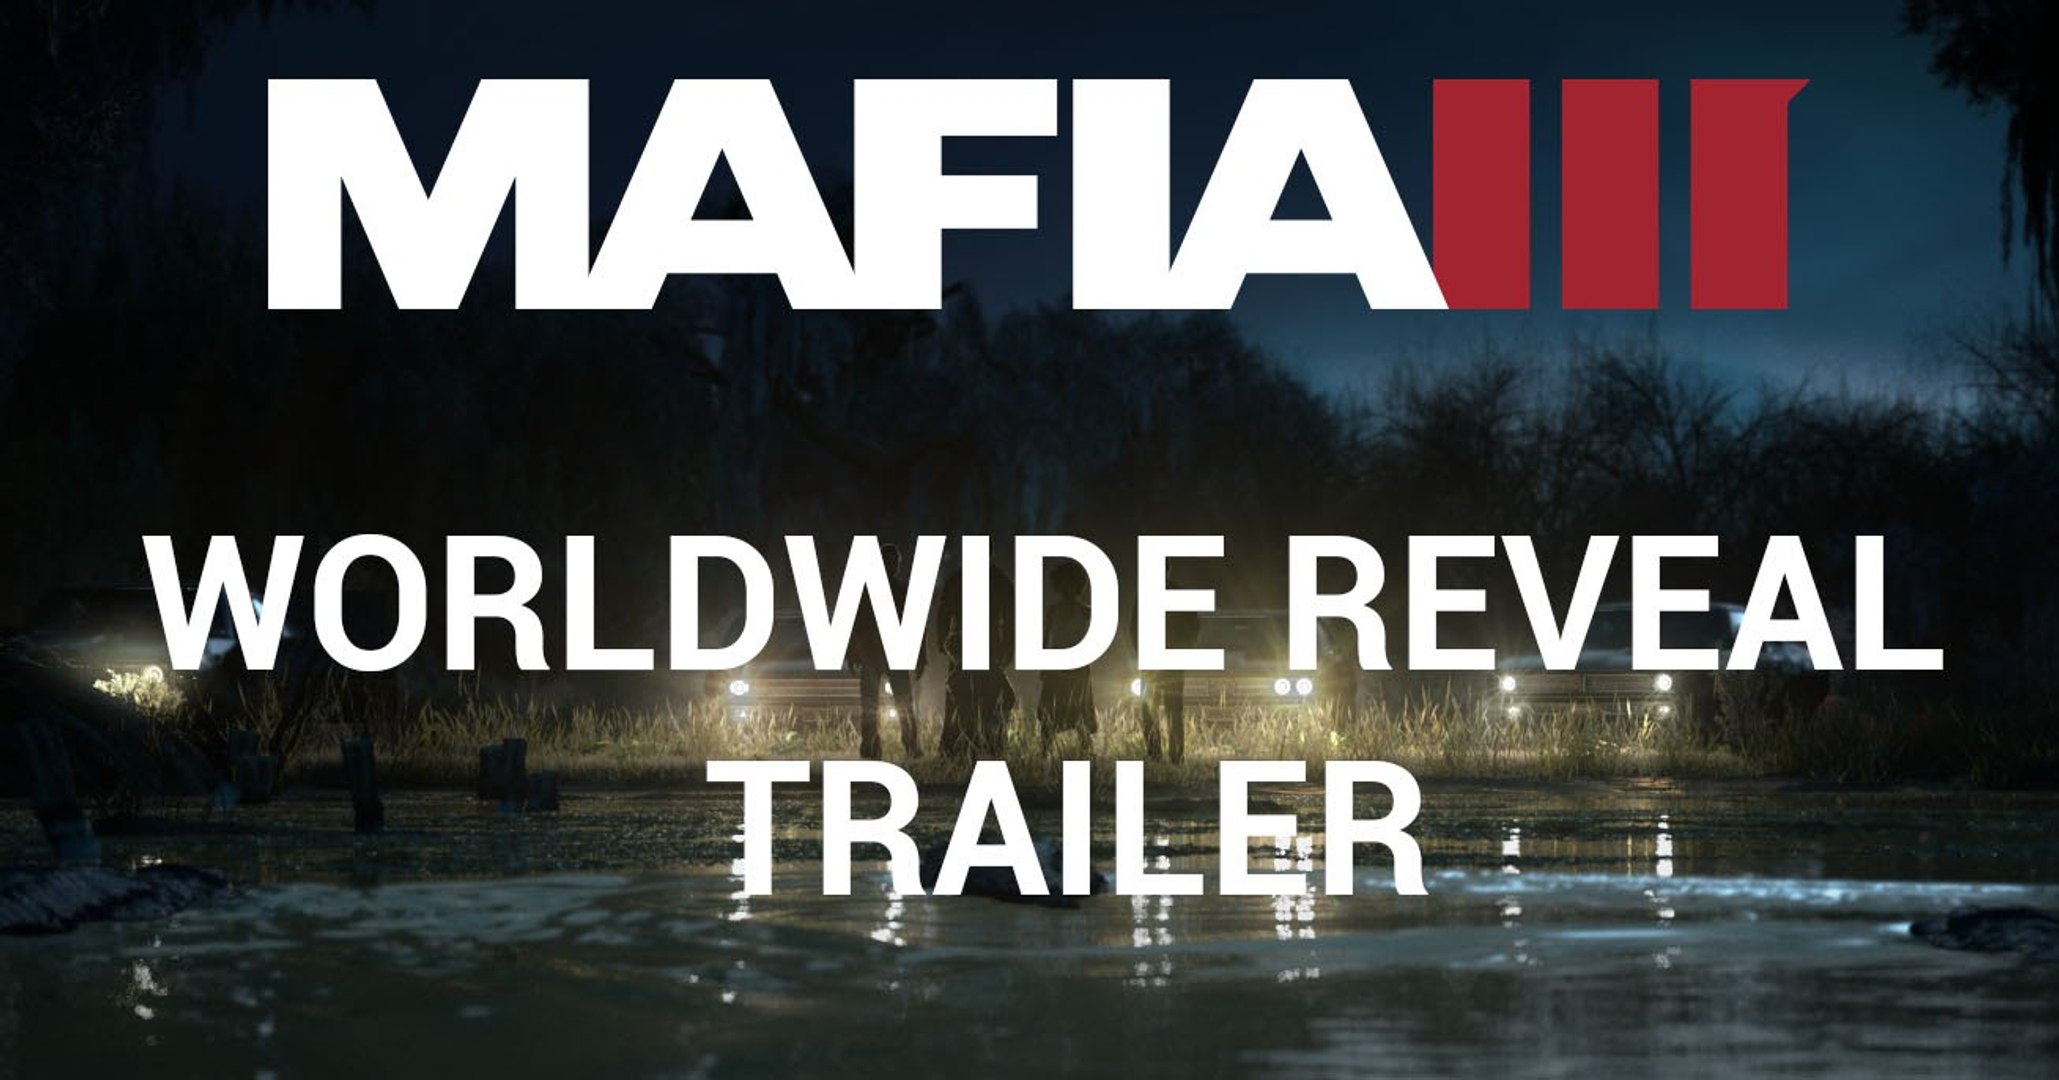 Mafia III - Worldwide Reveal Trailer video Dailymotion